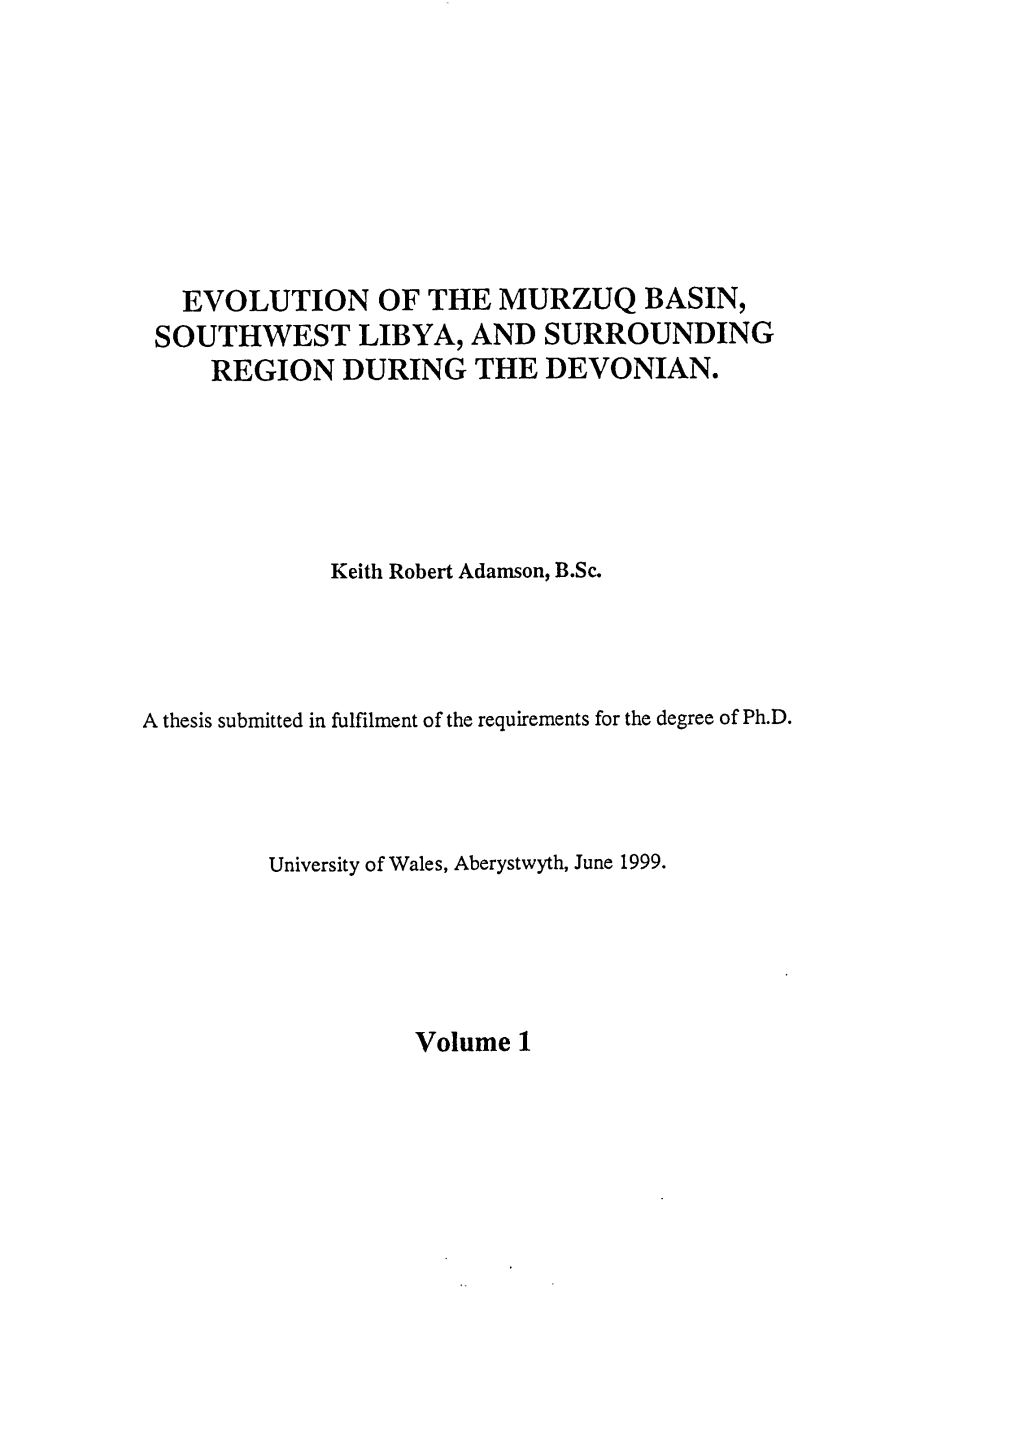 Evolution of the Murzuq Basin, Southwest Libya, and Surrounding Region During the Devonian